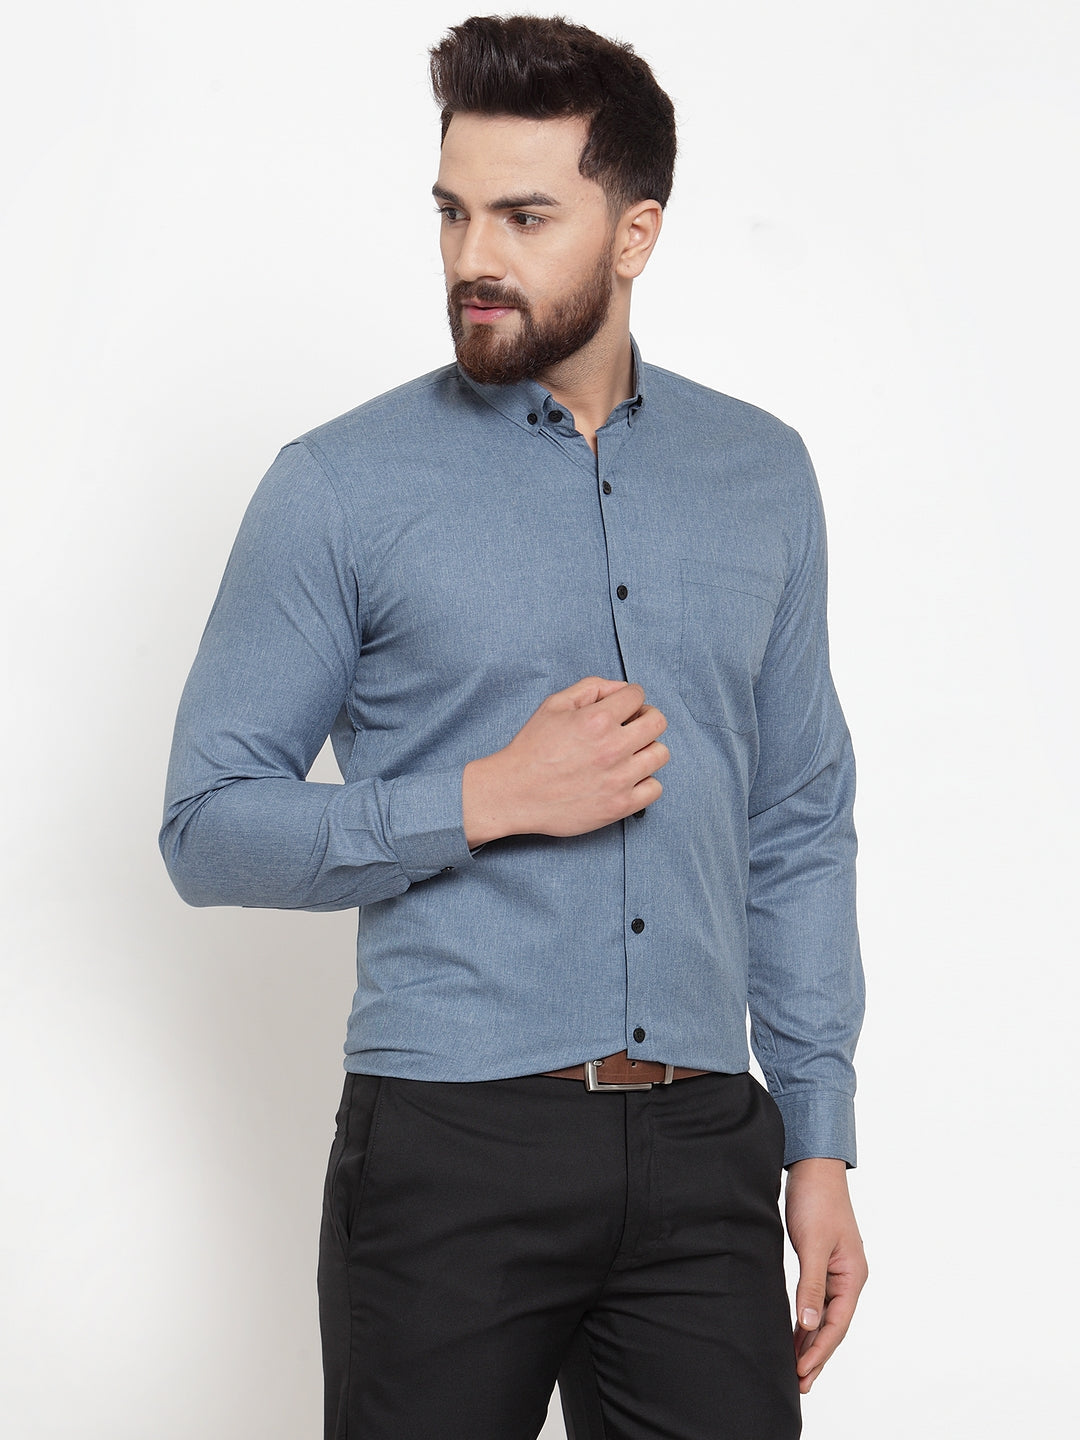 Men's Grey Cotton Solid Button Down Formal Shirts ( SF 734Grey ) - Jainish